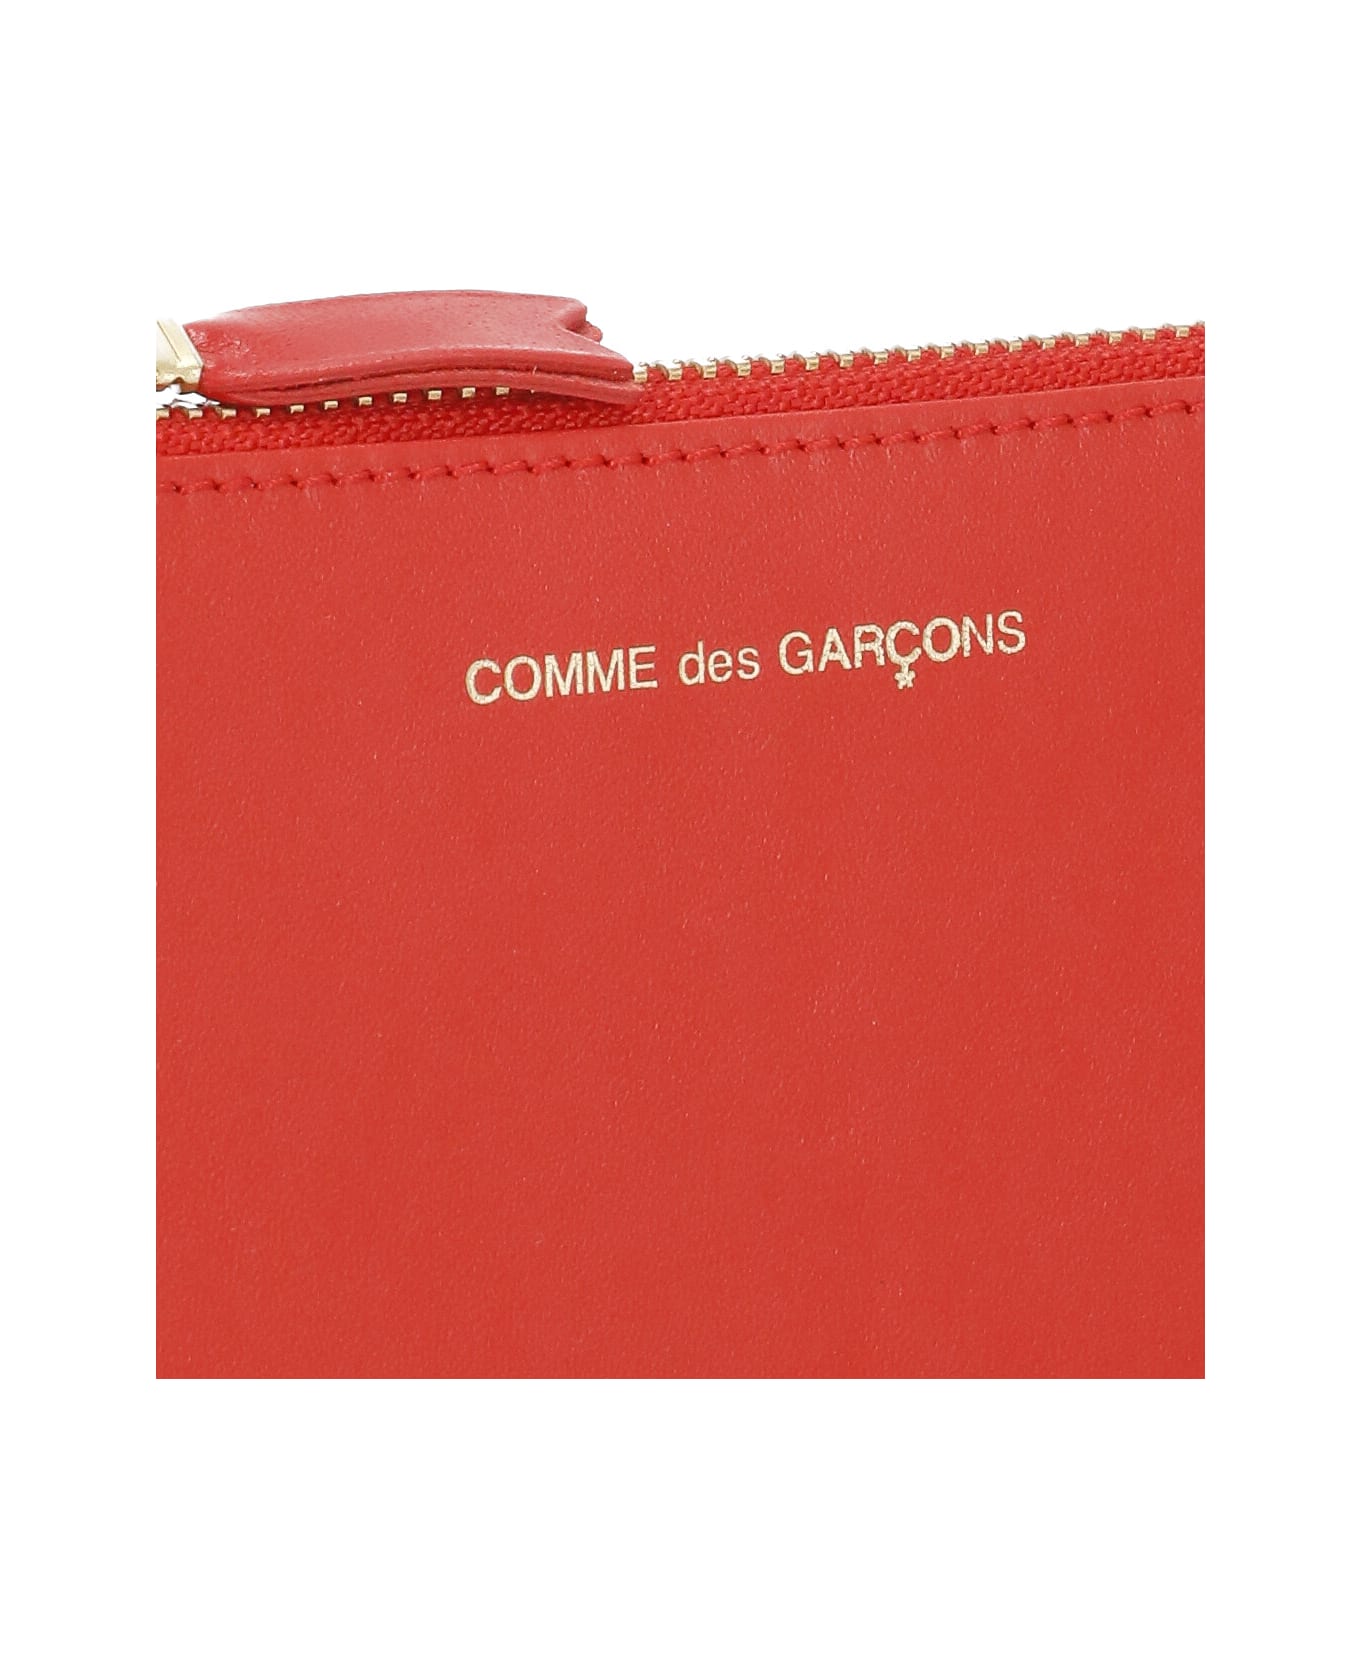 Comme des Garçons Wallet Wallet With Logo - Red 財布